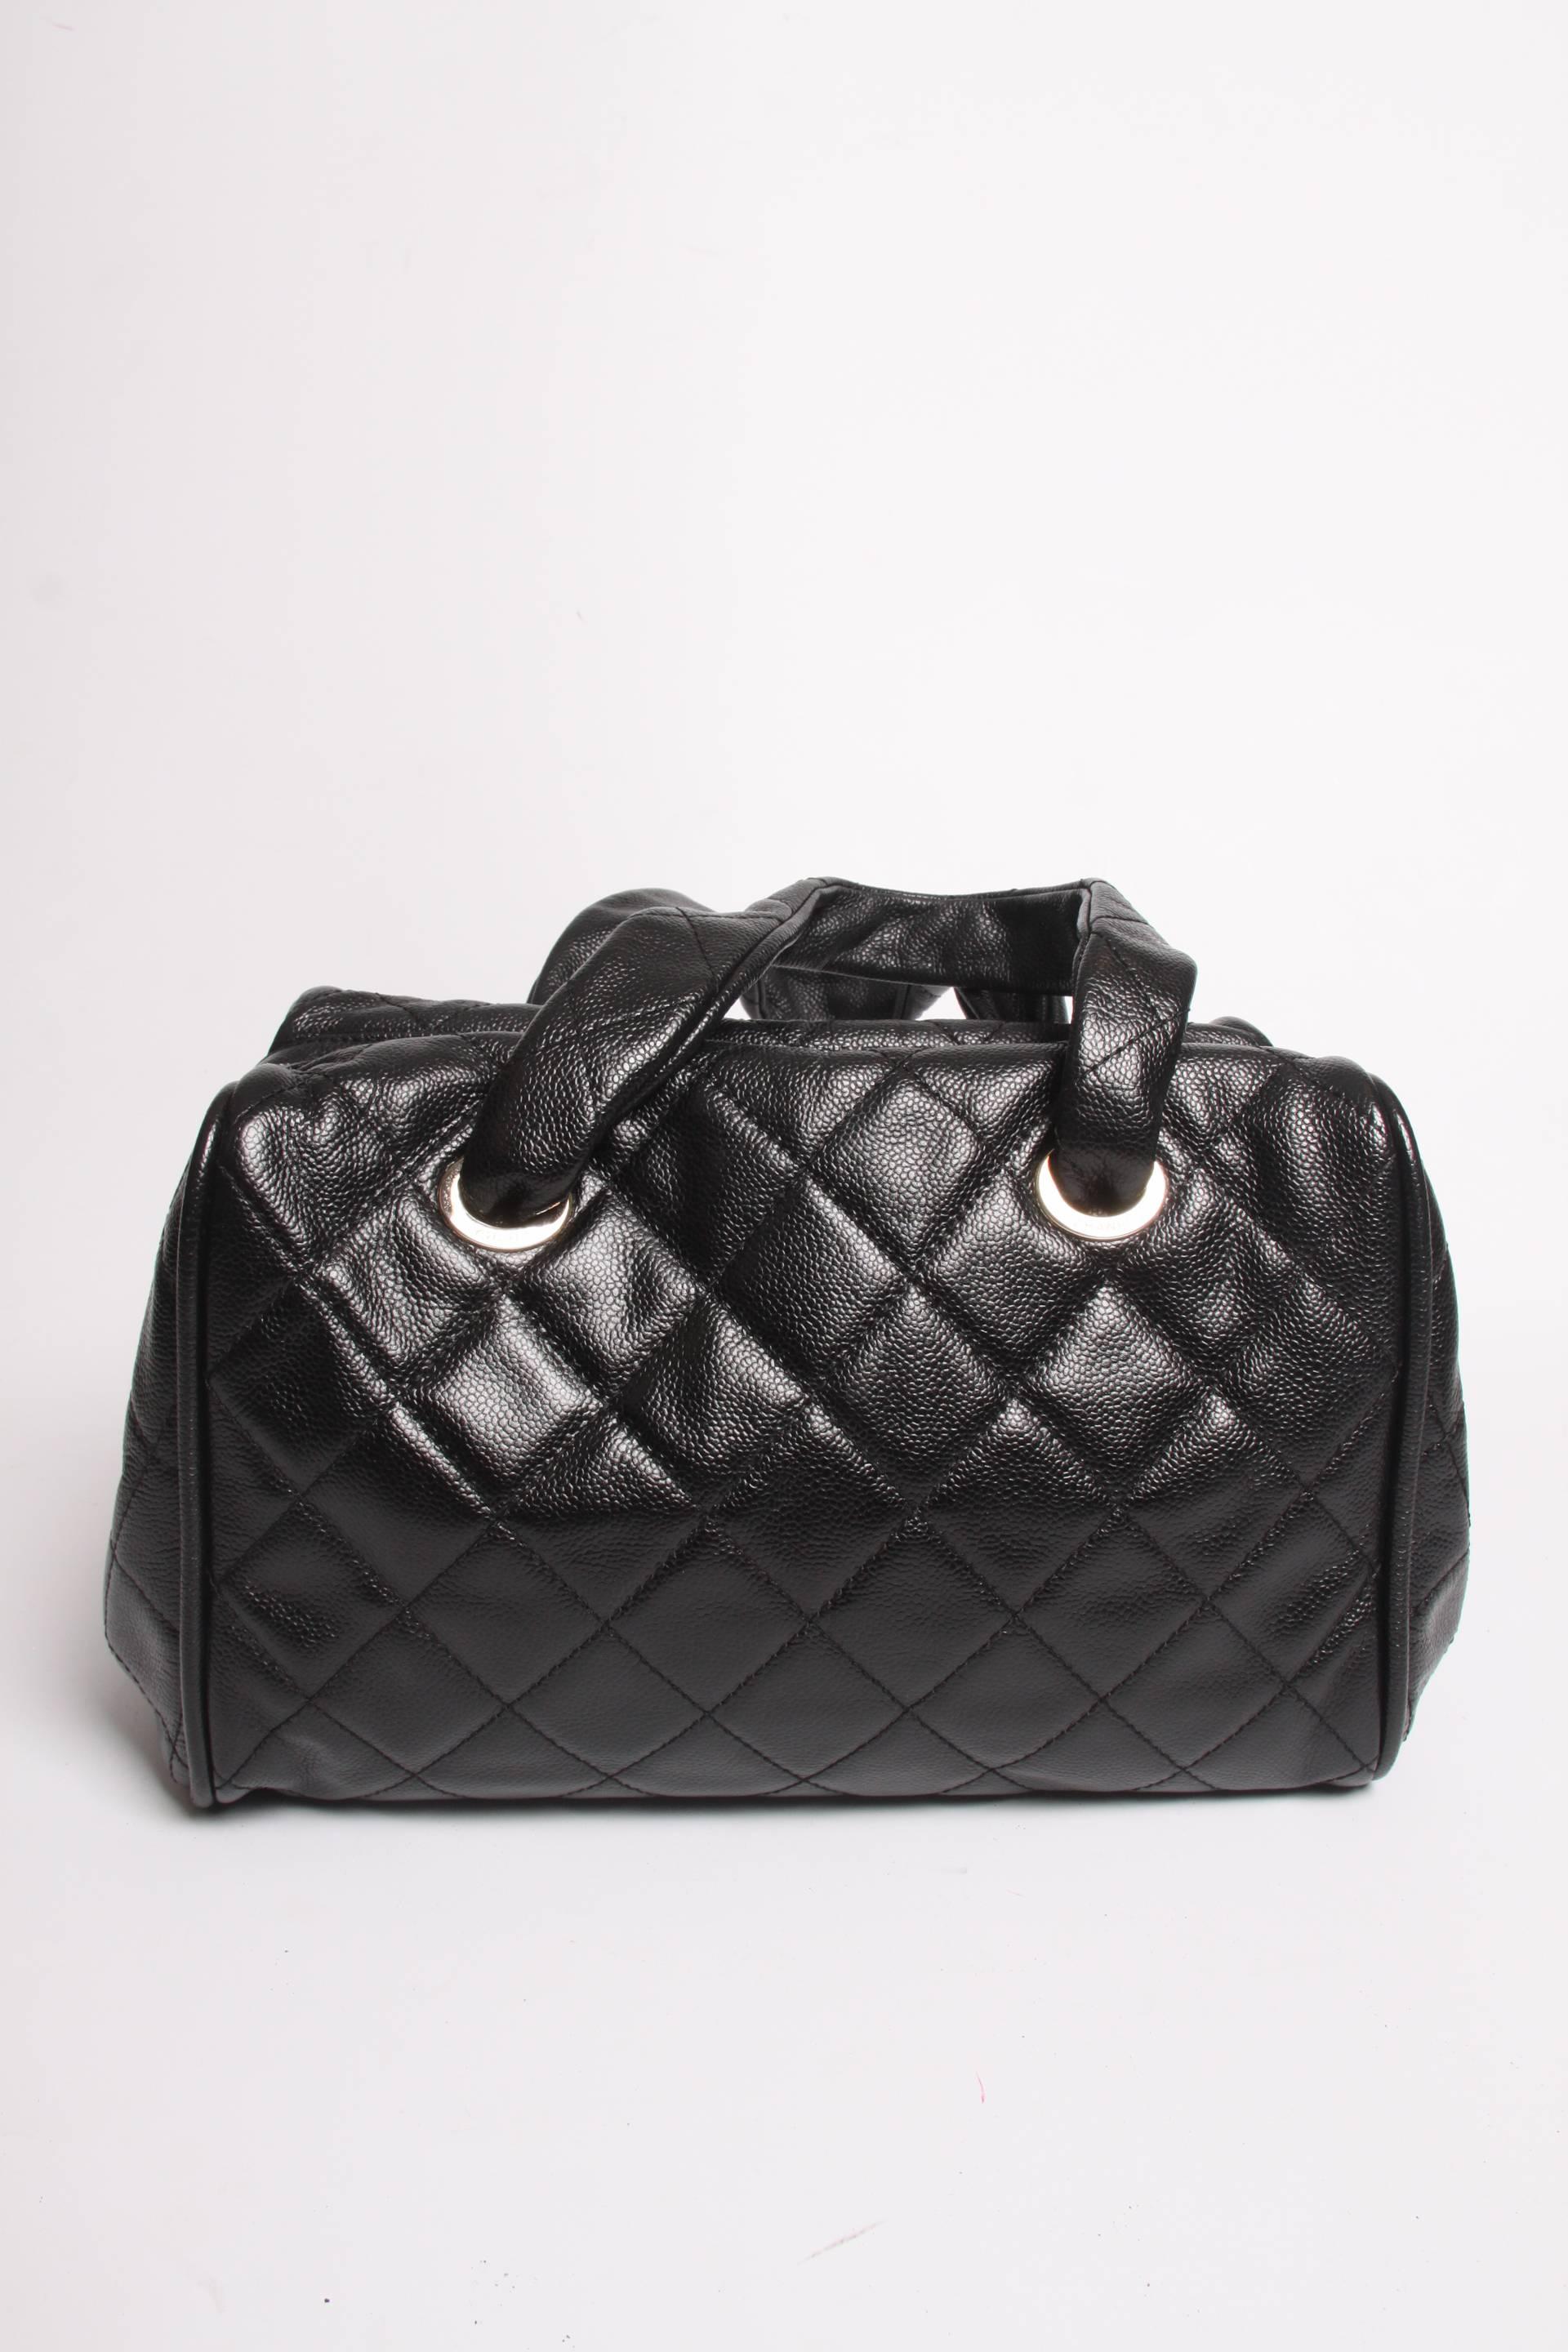 Chanel Top Handle Shopper Bag - black caviar leather  For Sale 2